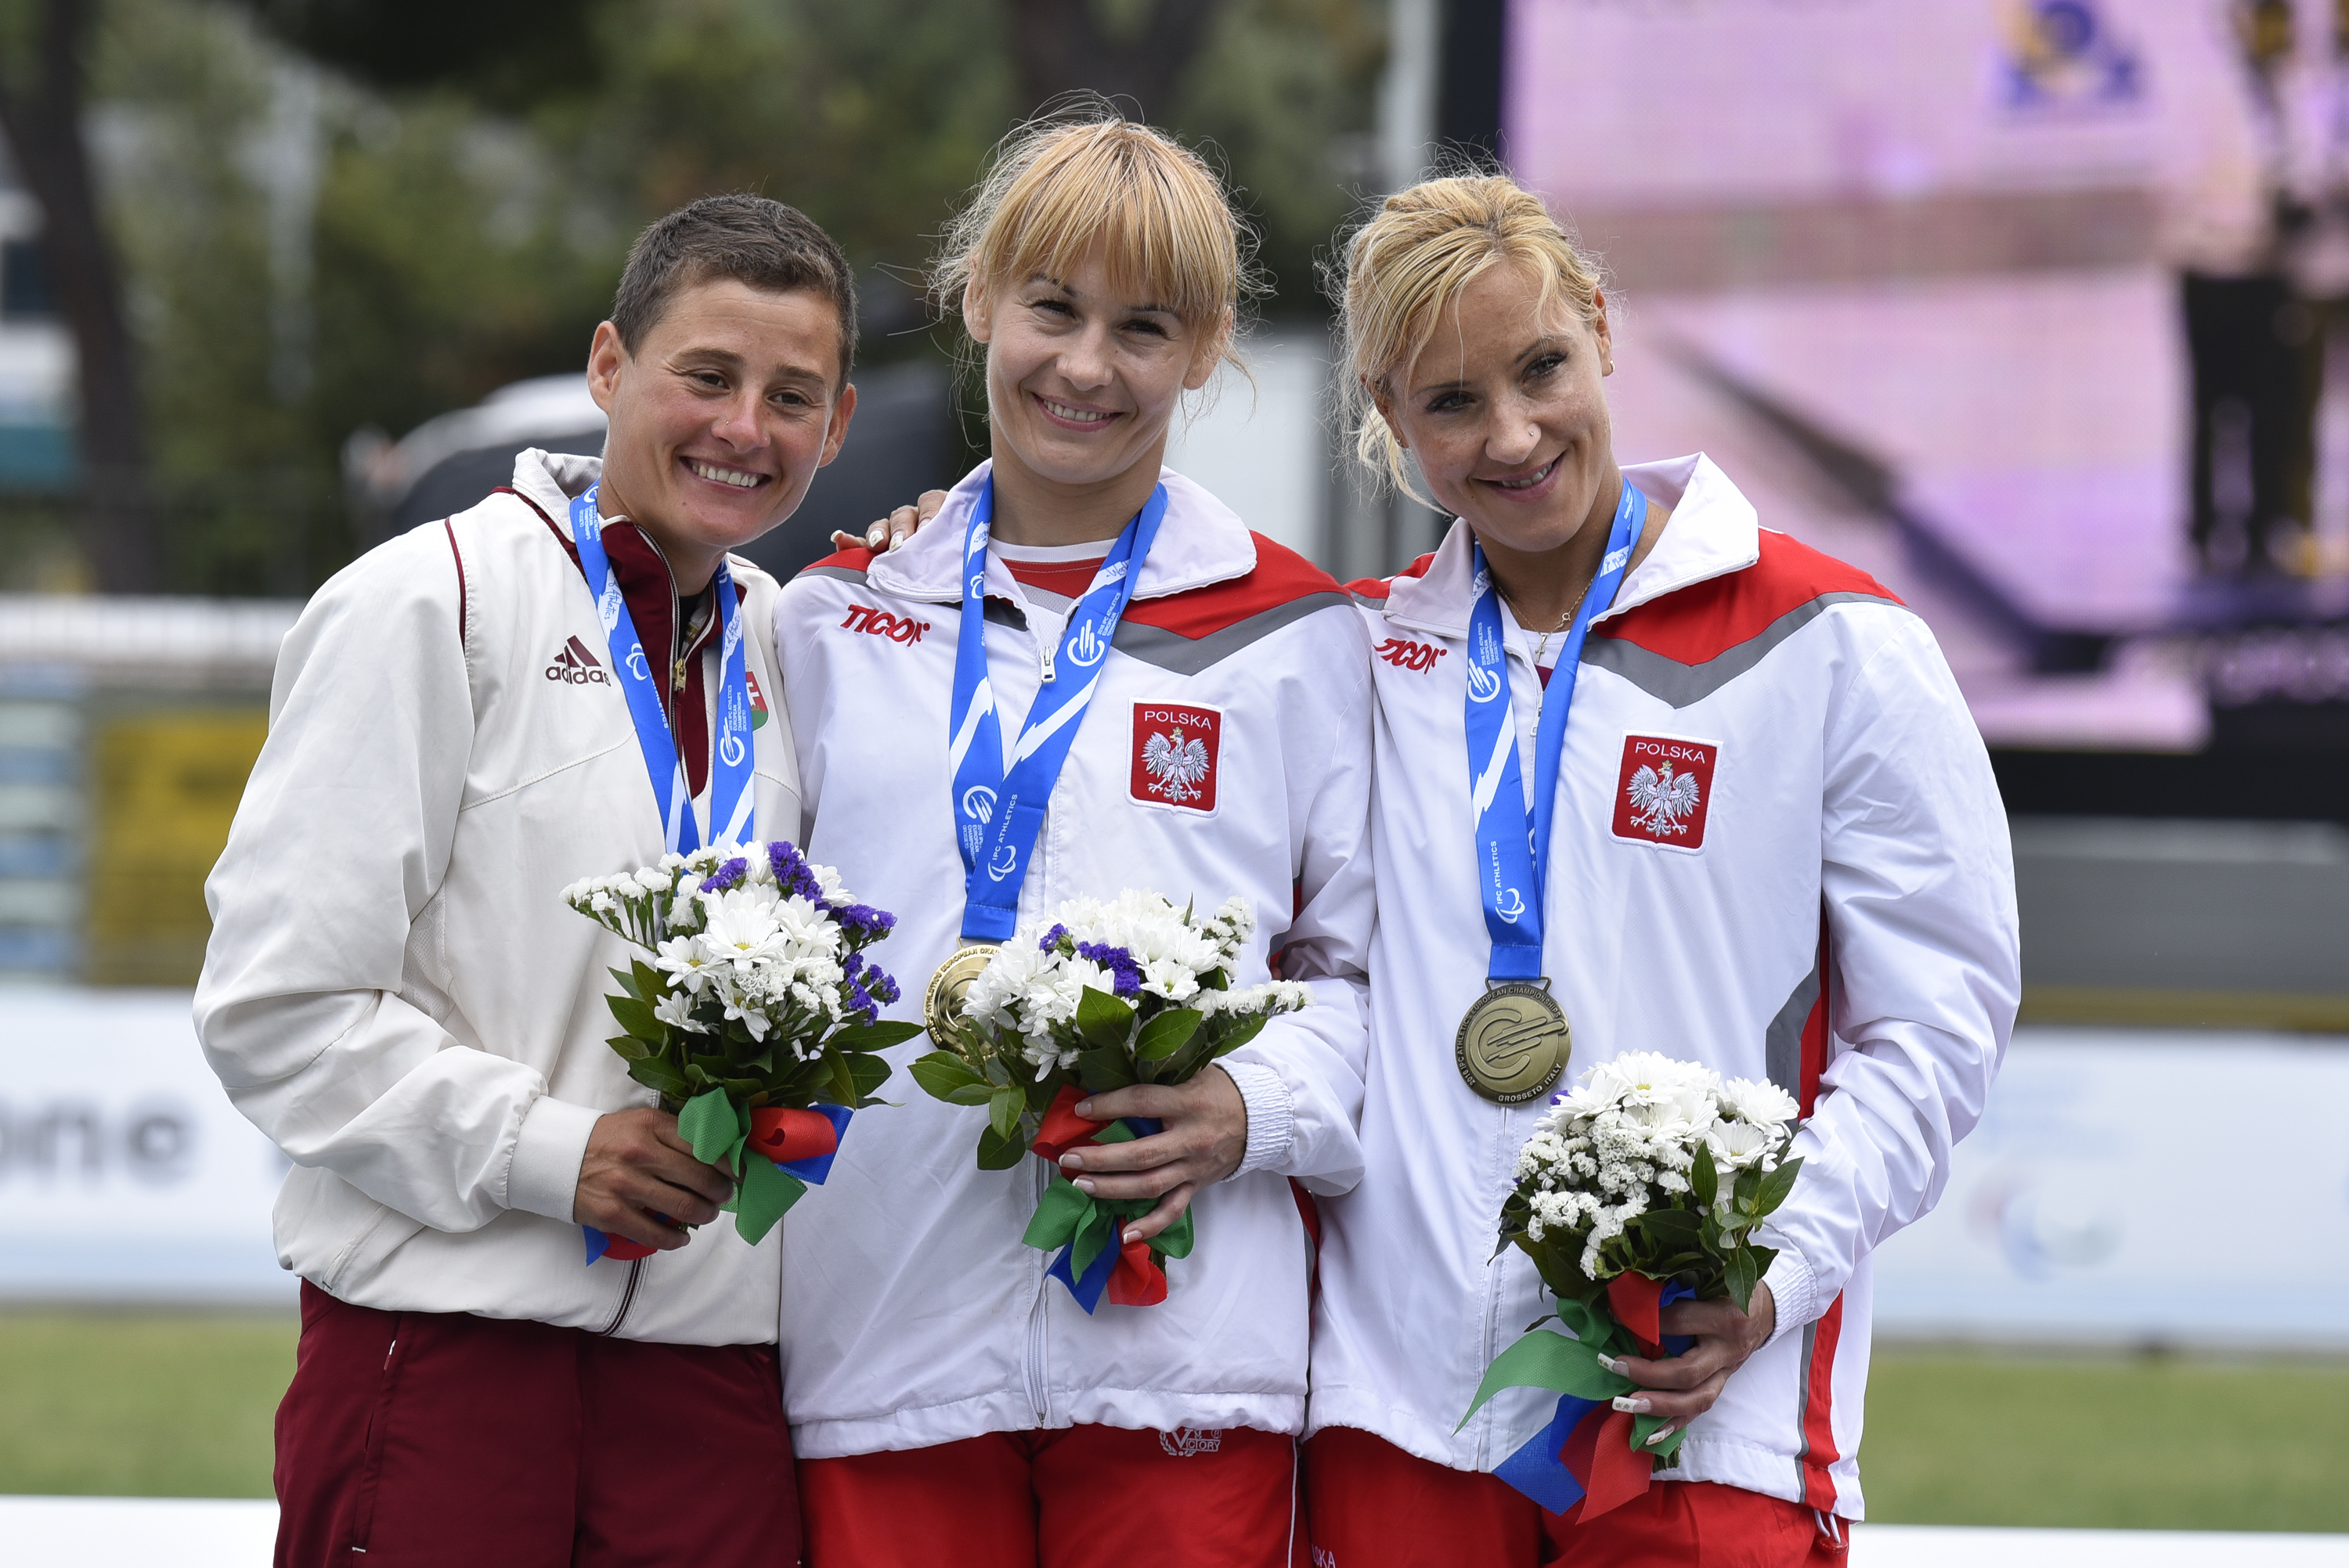 Podium with 3 women holding flowers